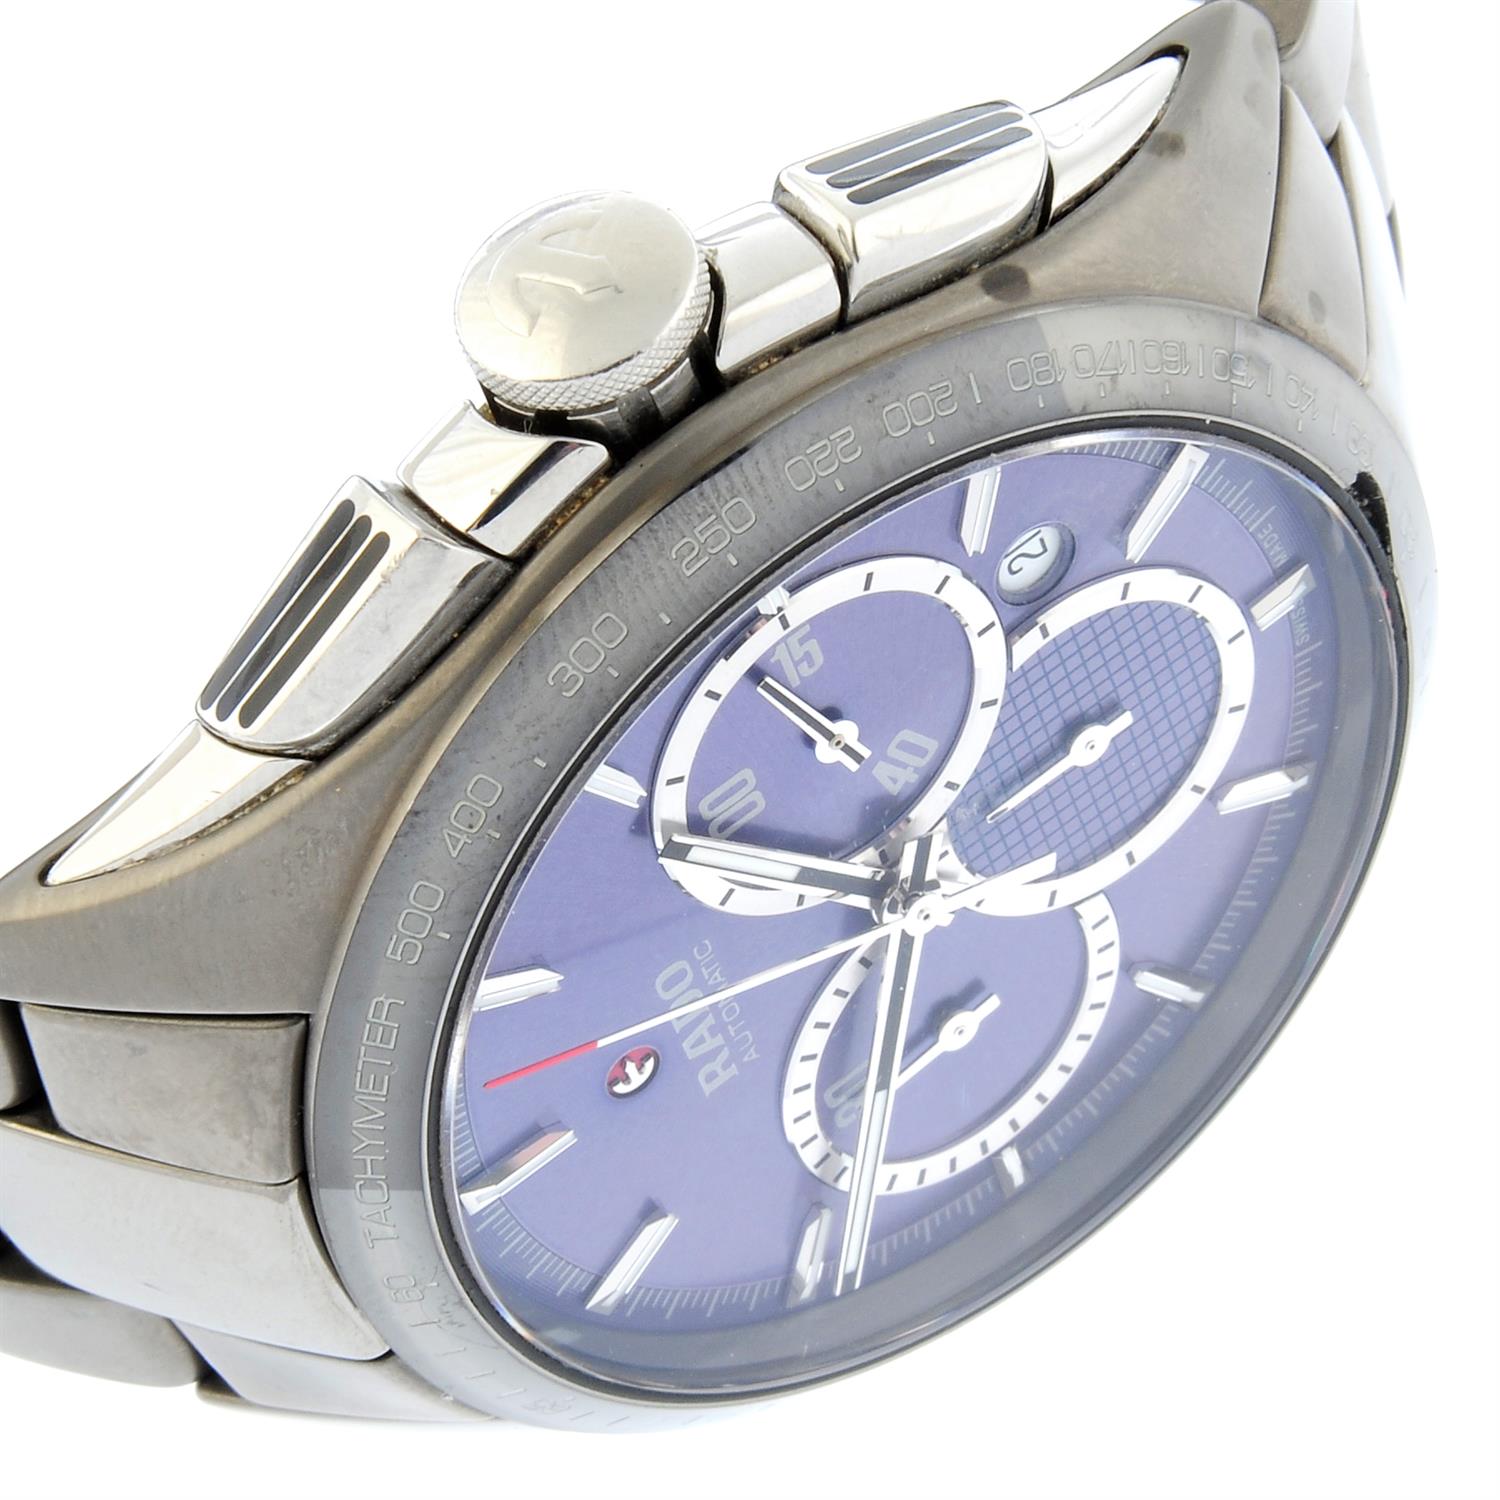 Rado - a Hyperchrome Match Point chronograph watch, 45mm. - Image 3 of 4